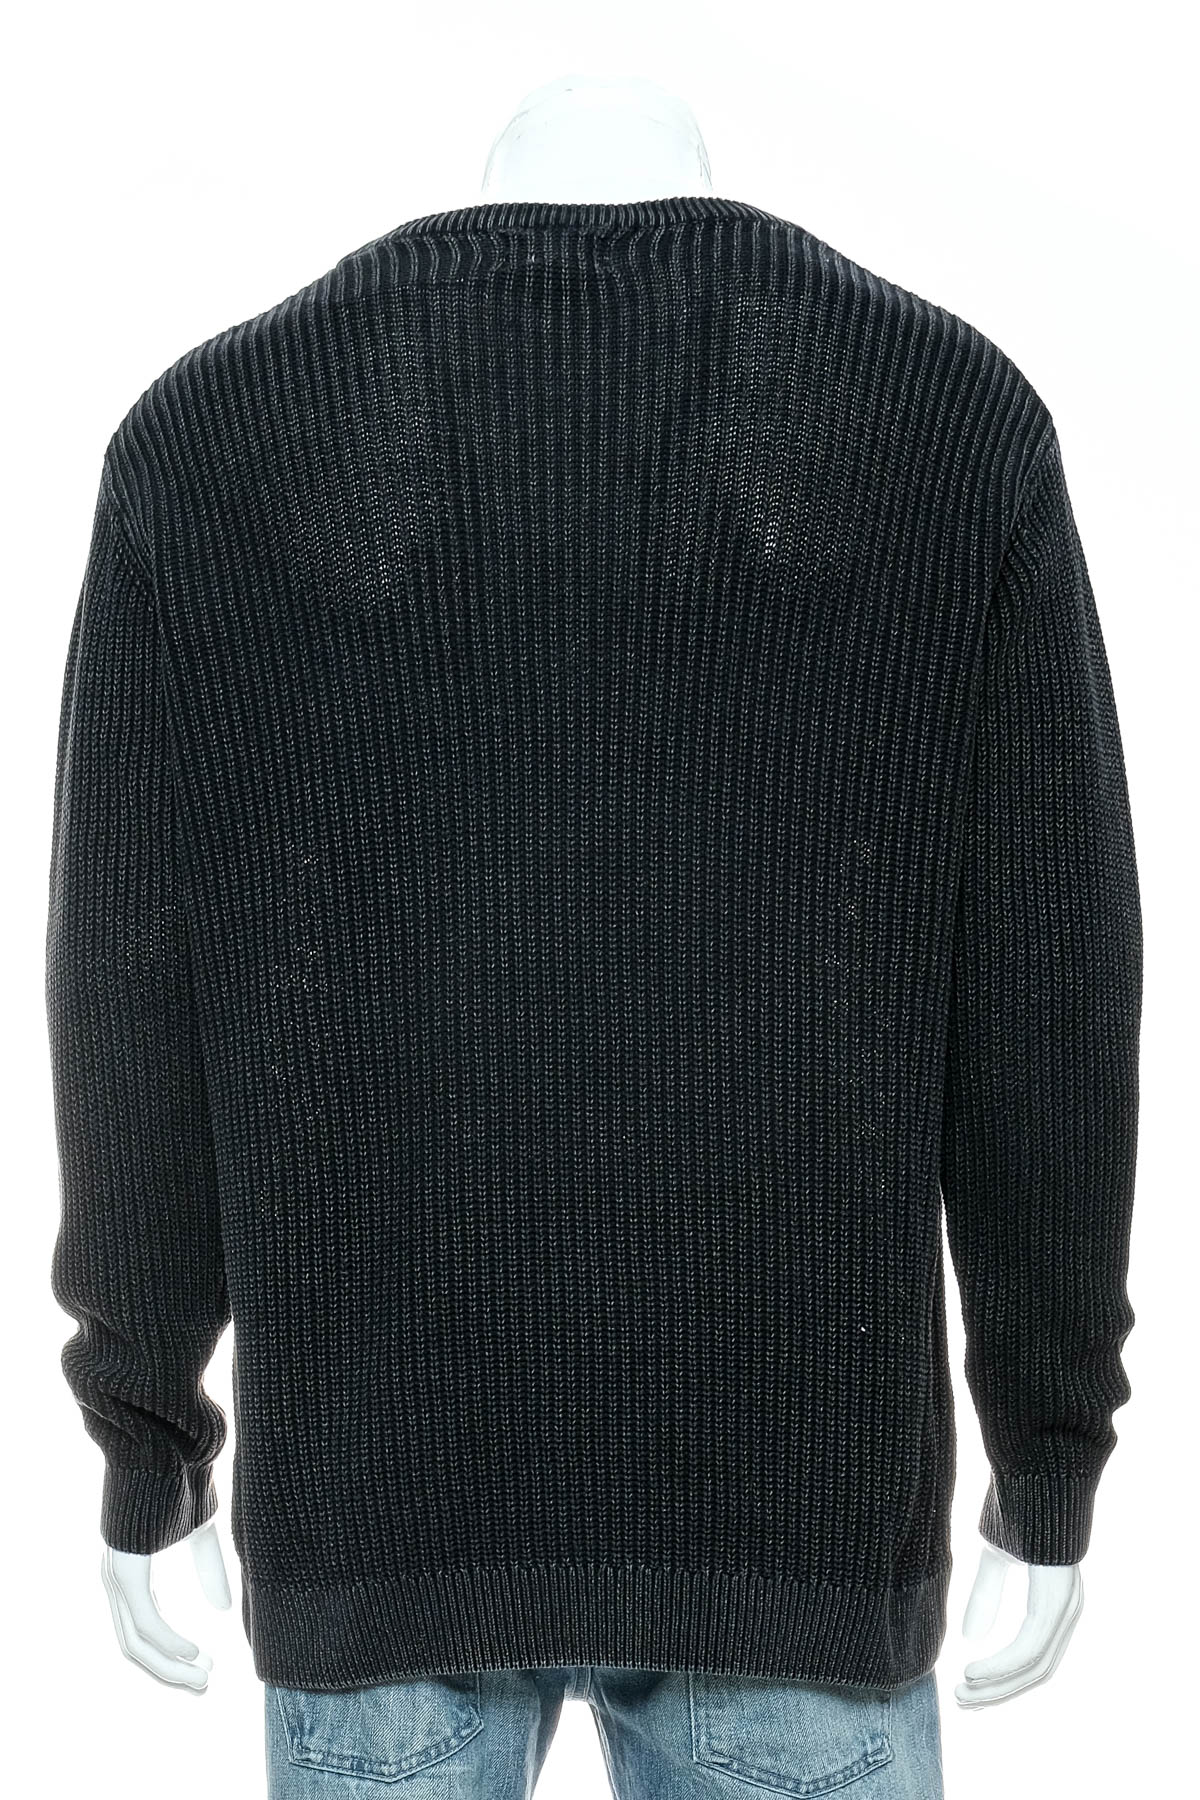 Men's sweater - Pull & Bear - 1